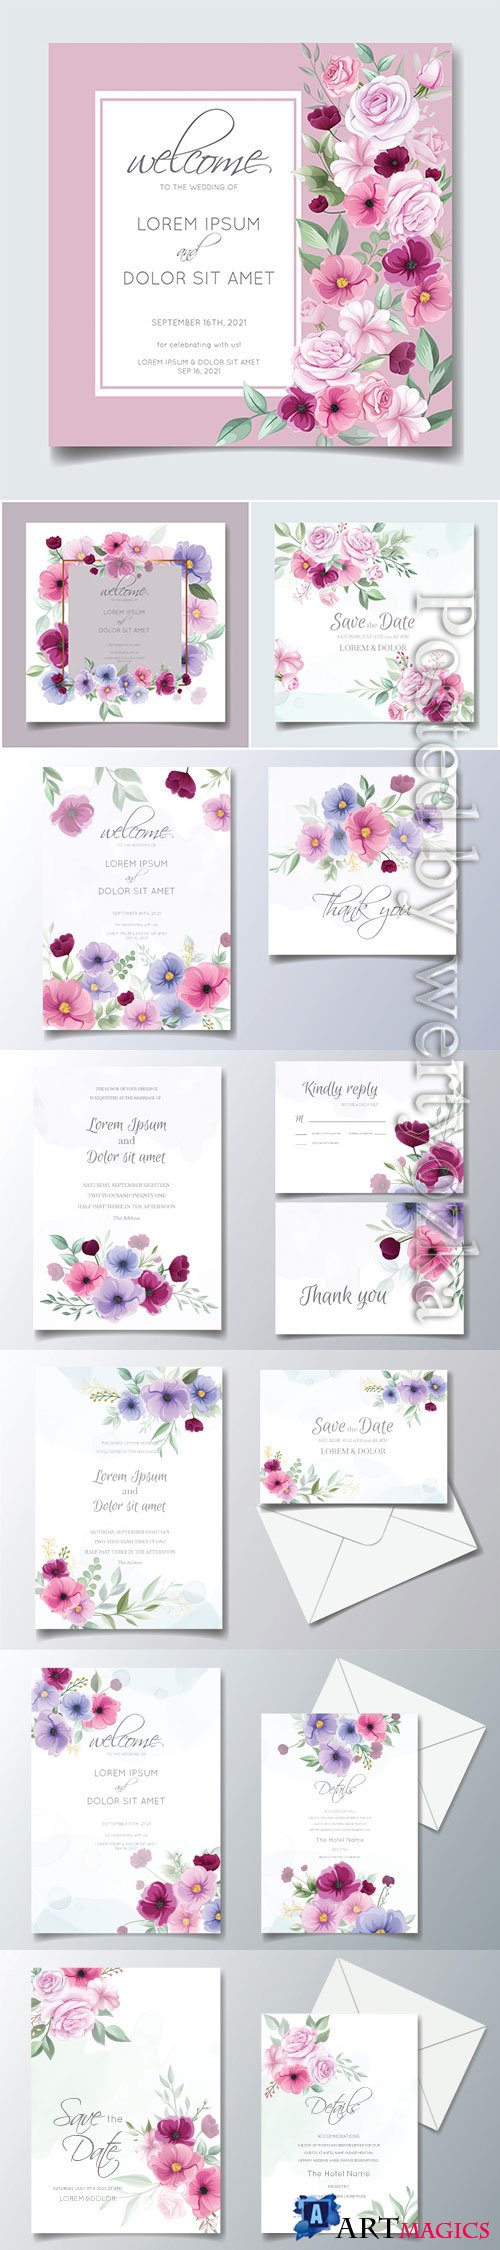 Colorful hand drawn floral wedding invitation card